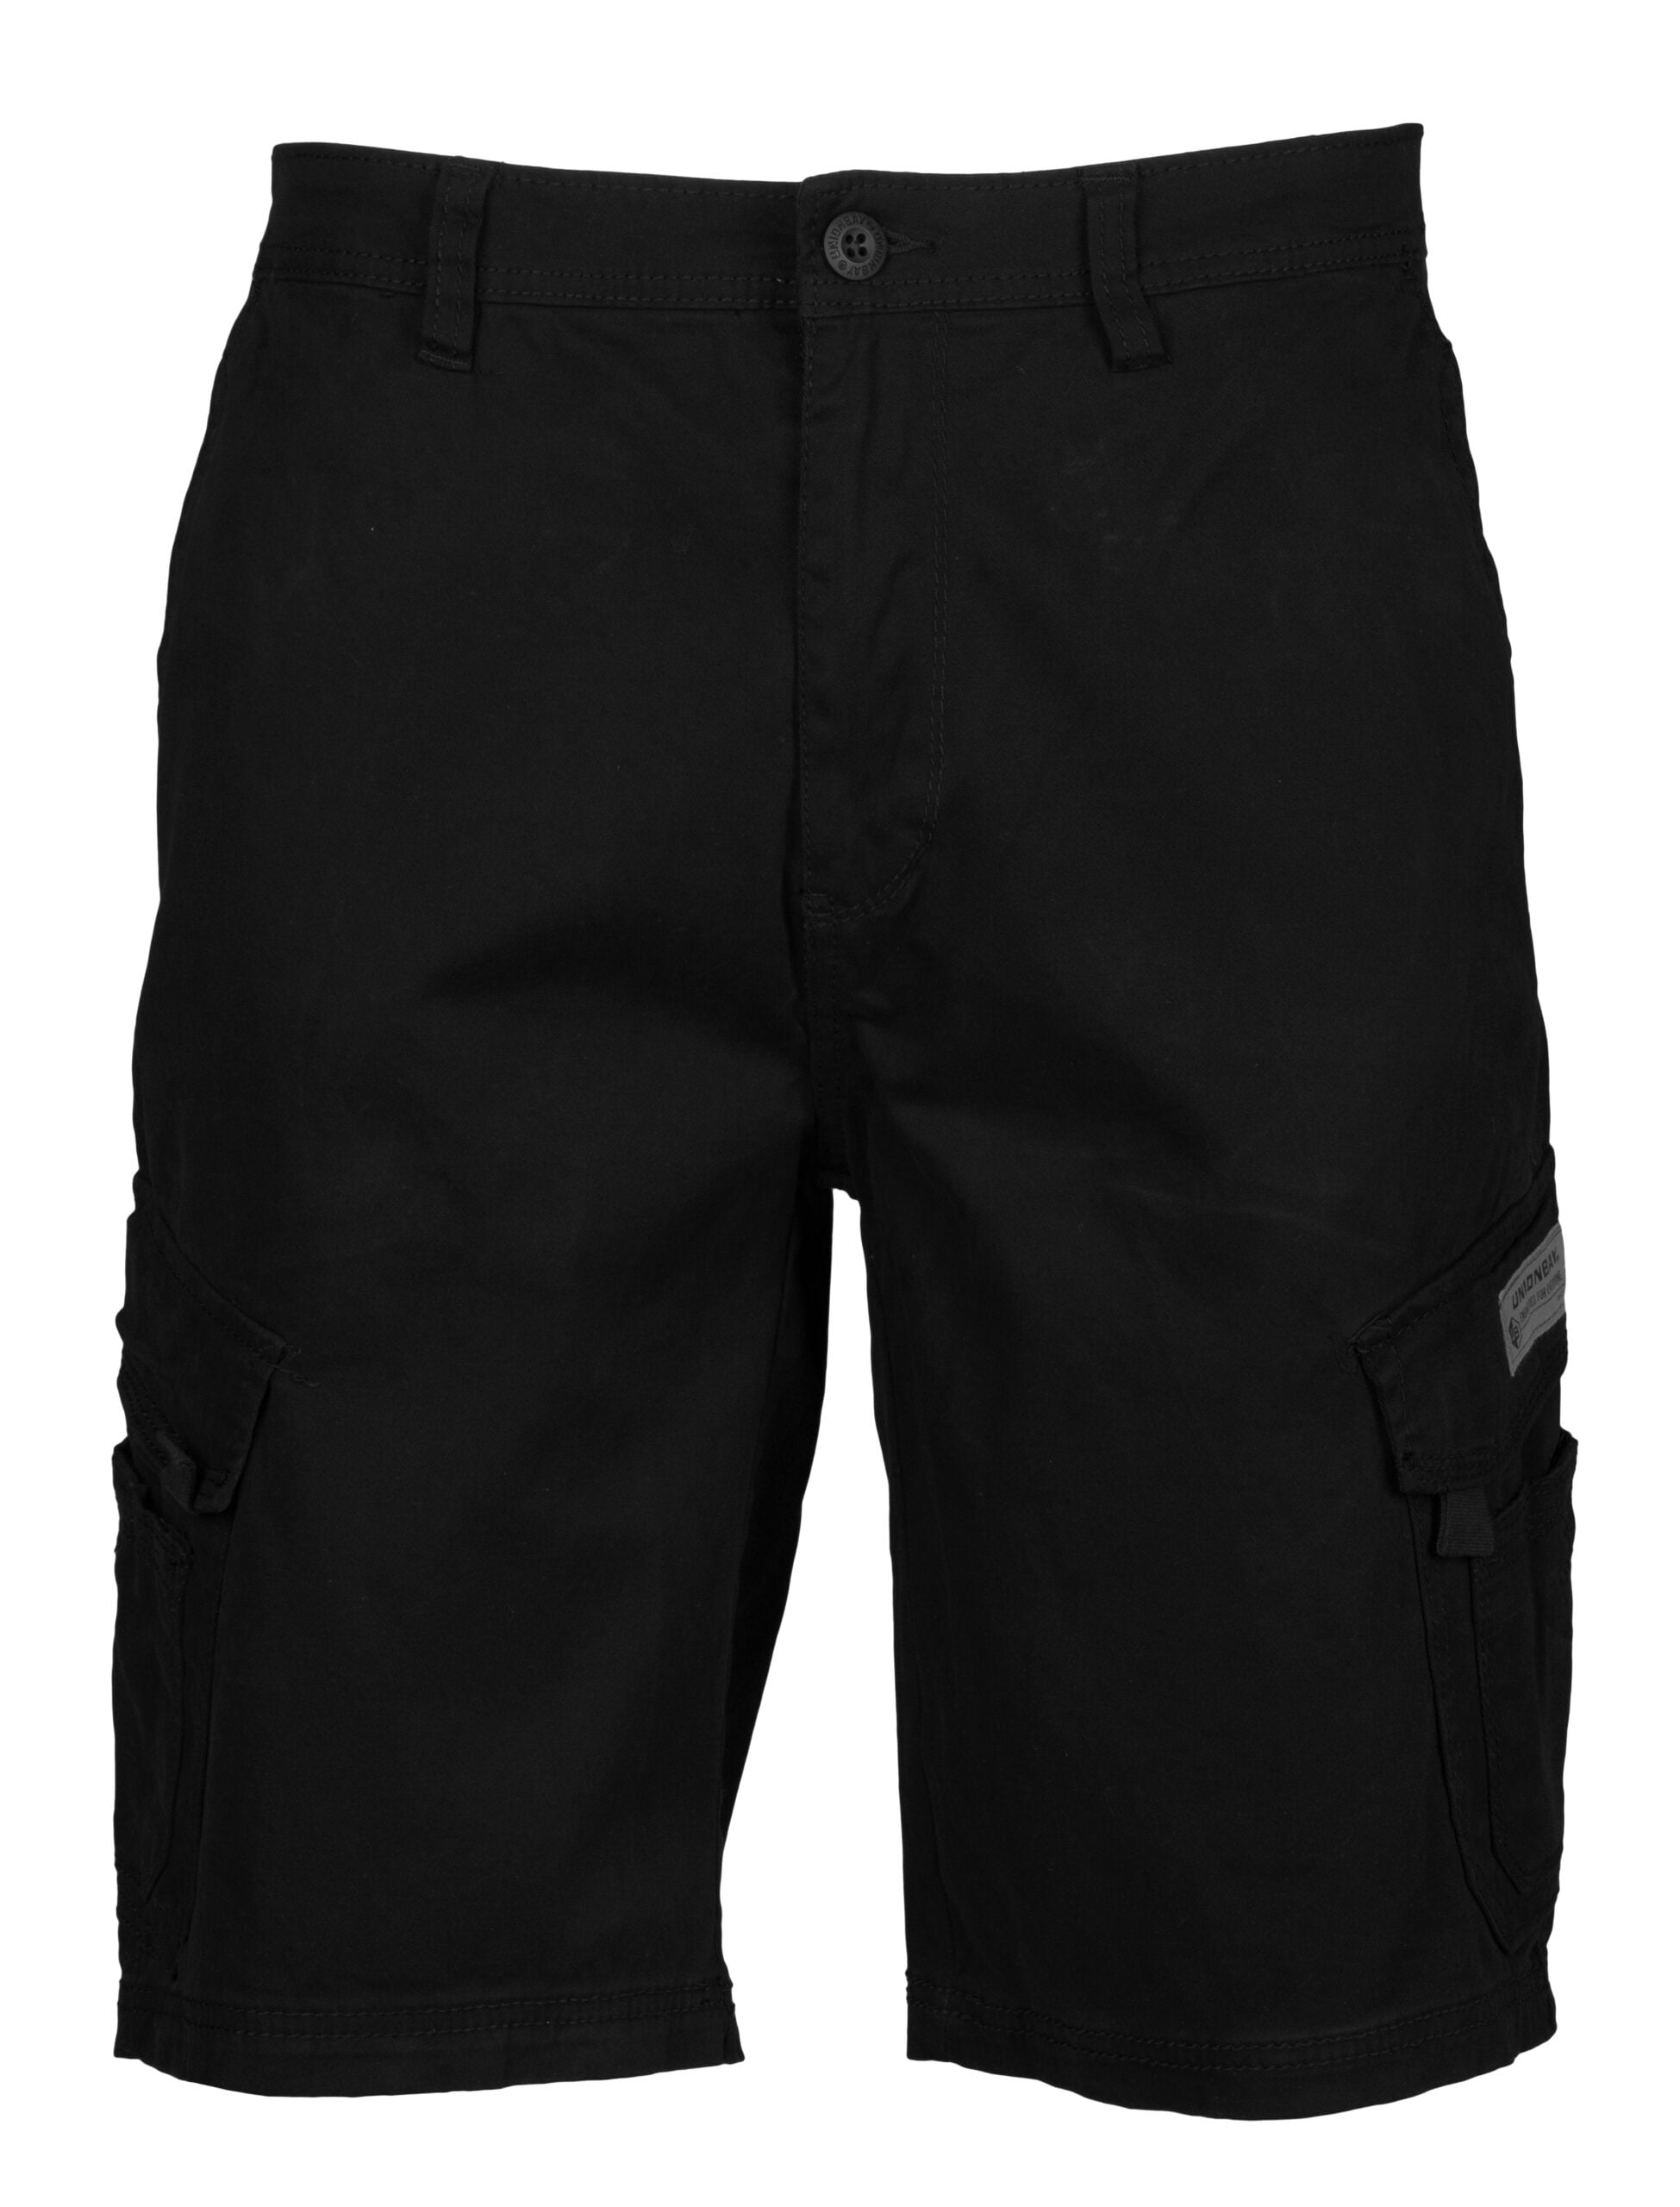 Unionbay Men's Cargo Shorts (Black, 42) - Walmart.com